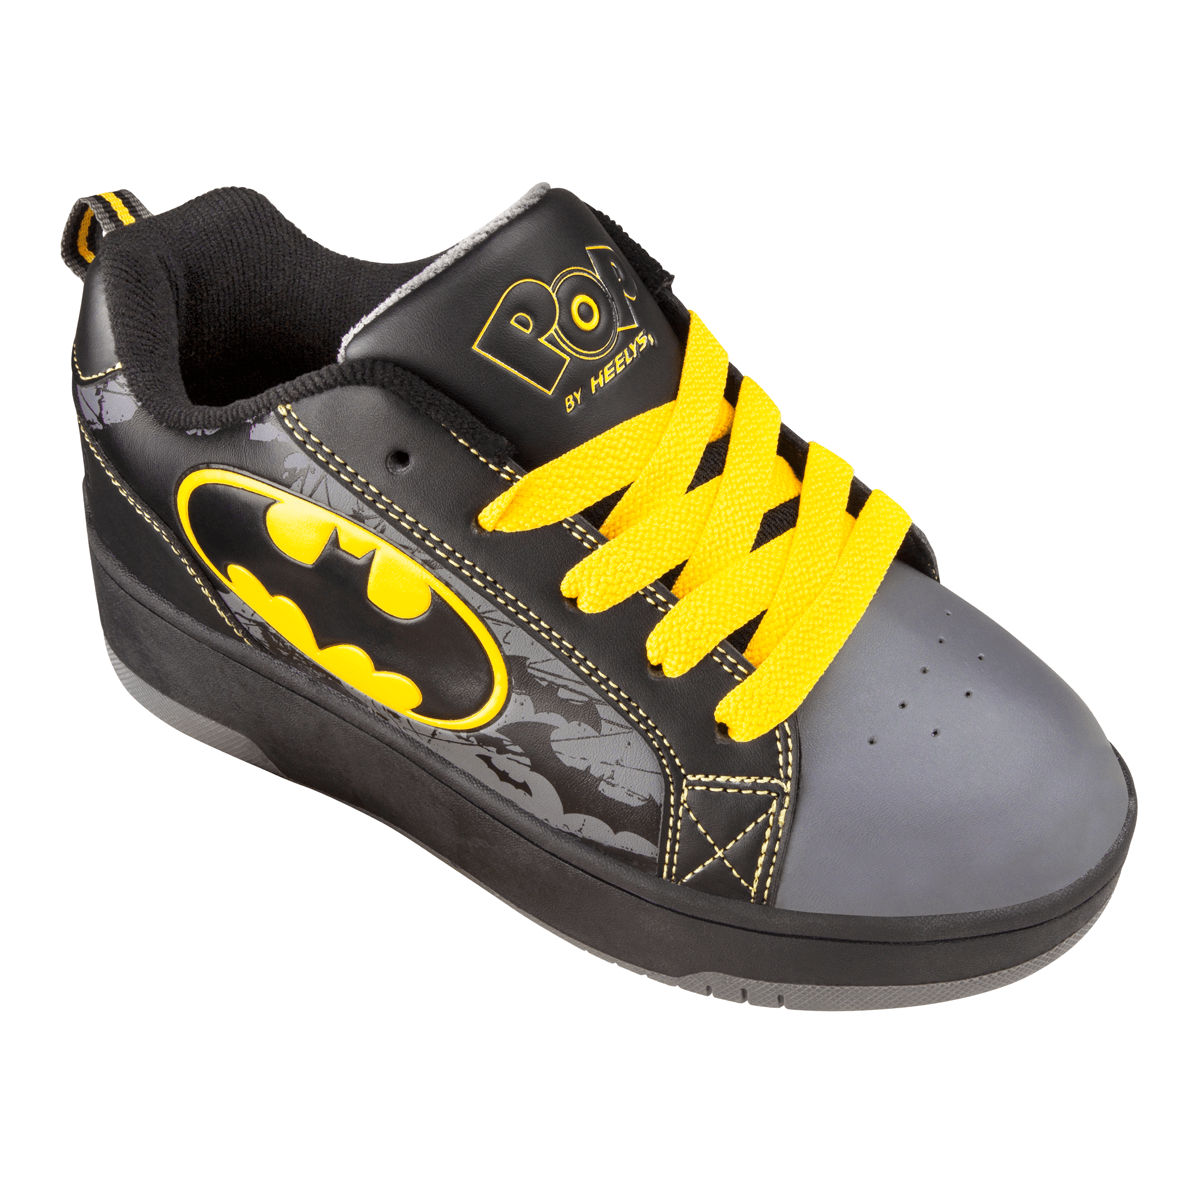 NEW Heelys Twister X2 Batman Grey/Black/Yellow Unisex Kids Skate Shoe Size 3M 